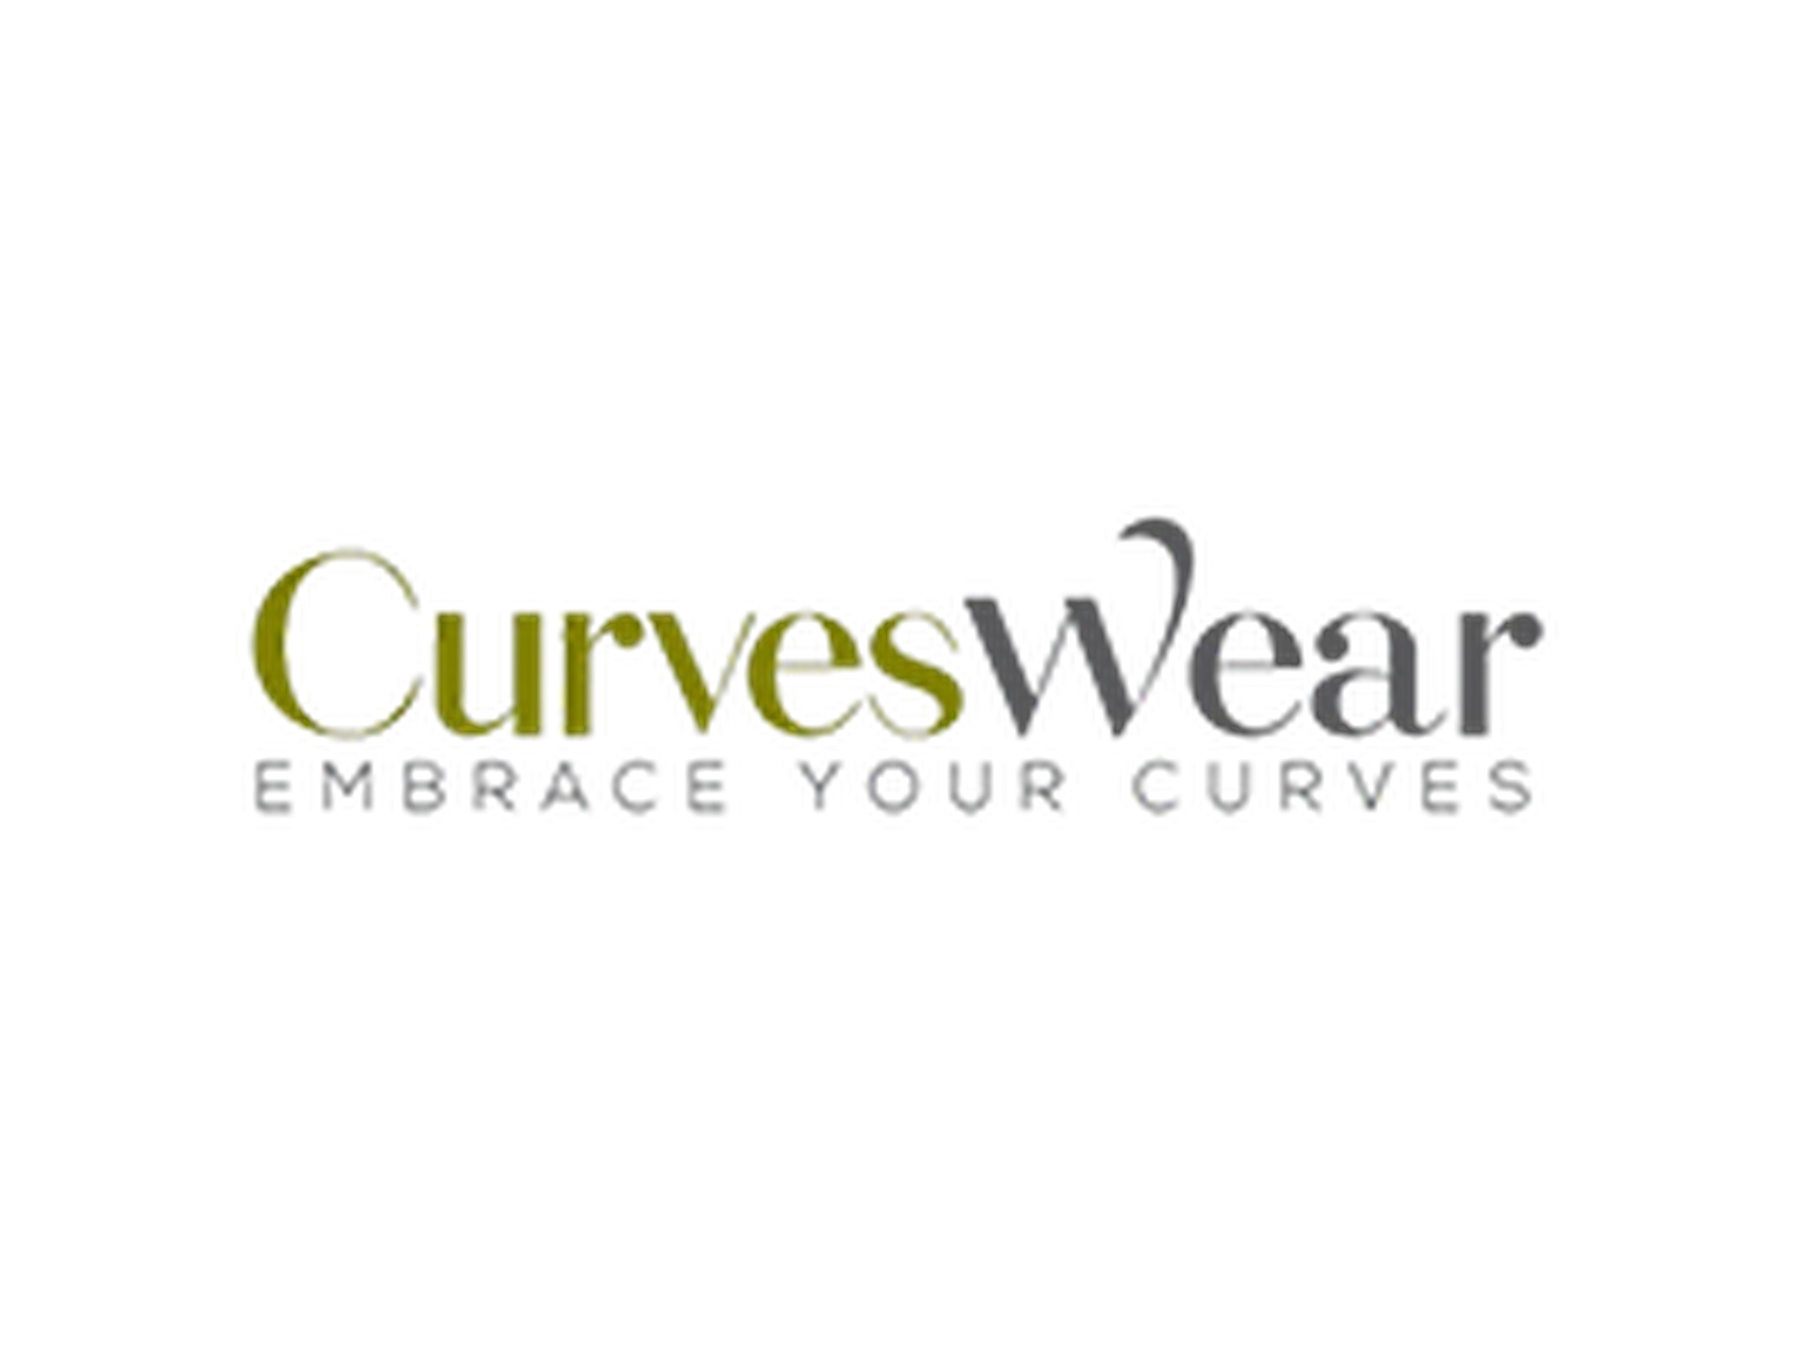 Curveswear kortingscode